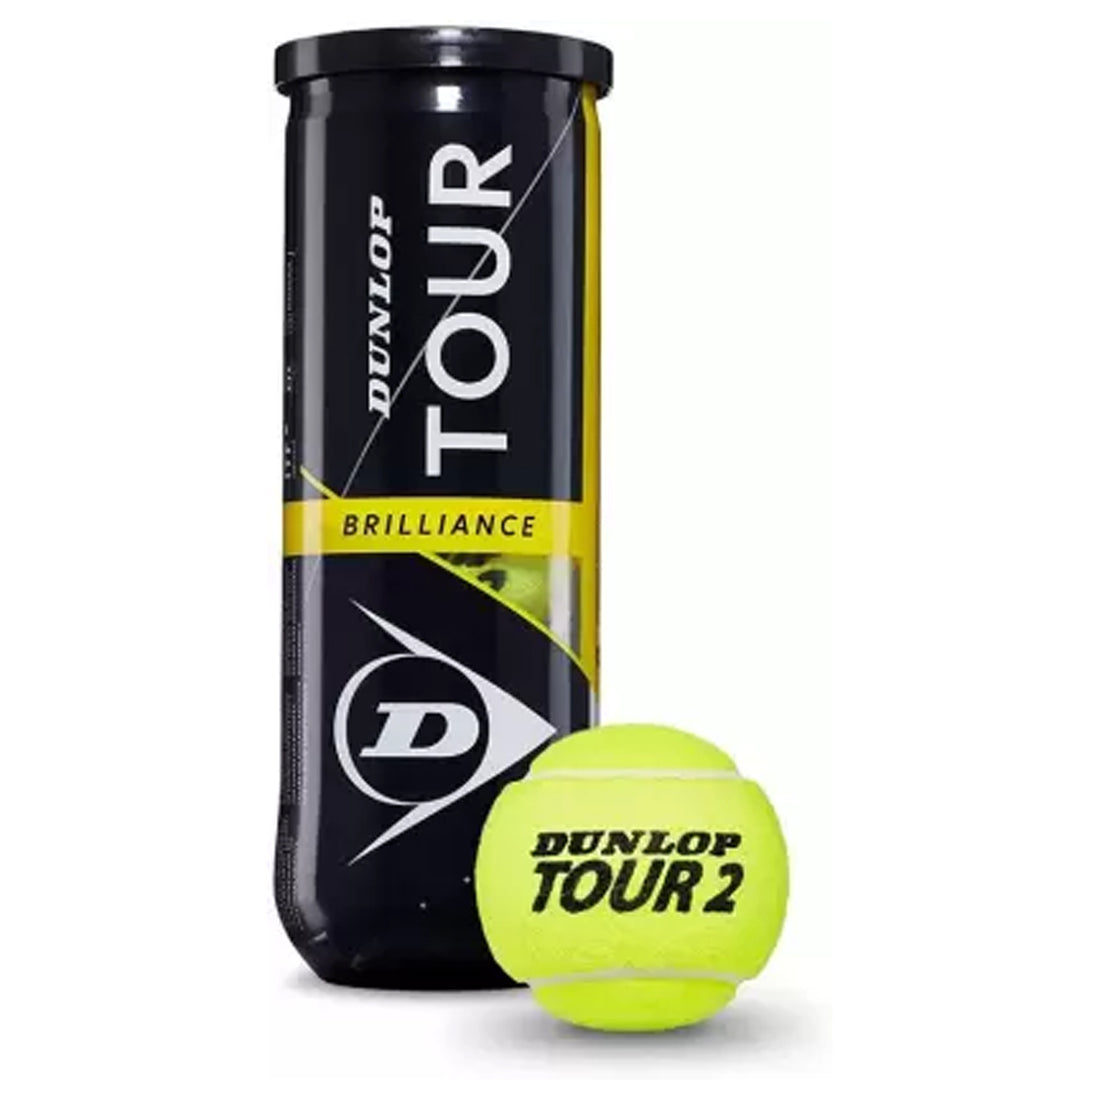 Dunlop Tour Brilliance Tennis Balls Dozen (4 Cans) - Best Price online Prokicksports.com